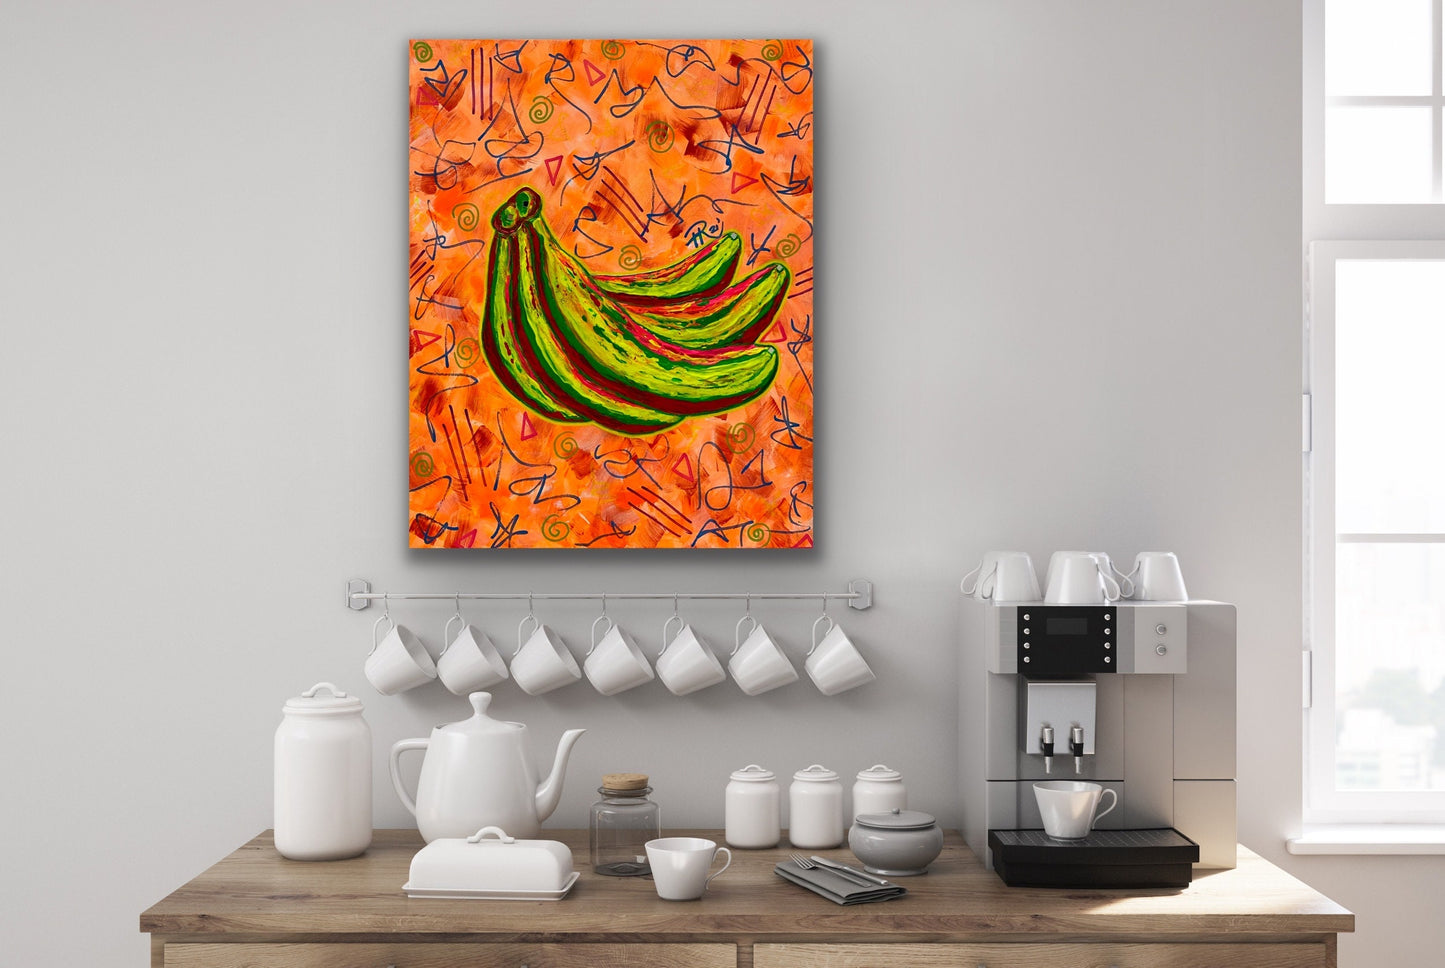 Bananas Fruit Pop Art Mixed Media Original Acrylic Painting